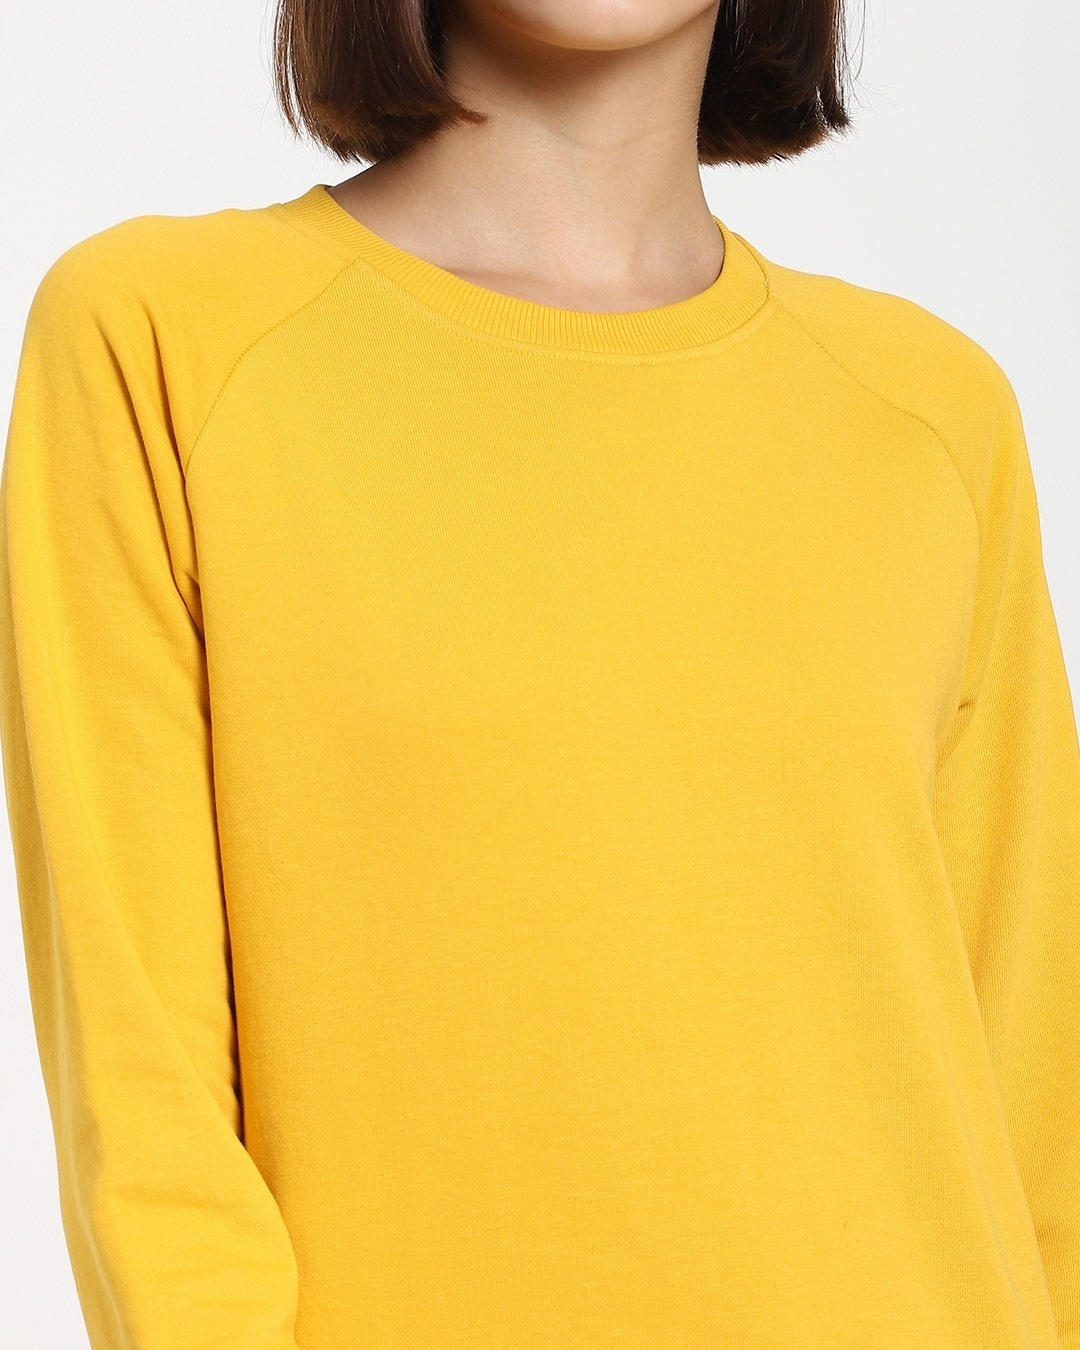 Shop Women's Solid Yellow Sweatshirt-Full